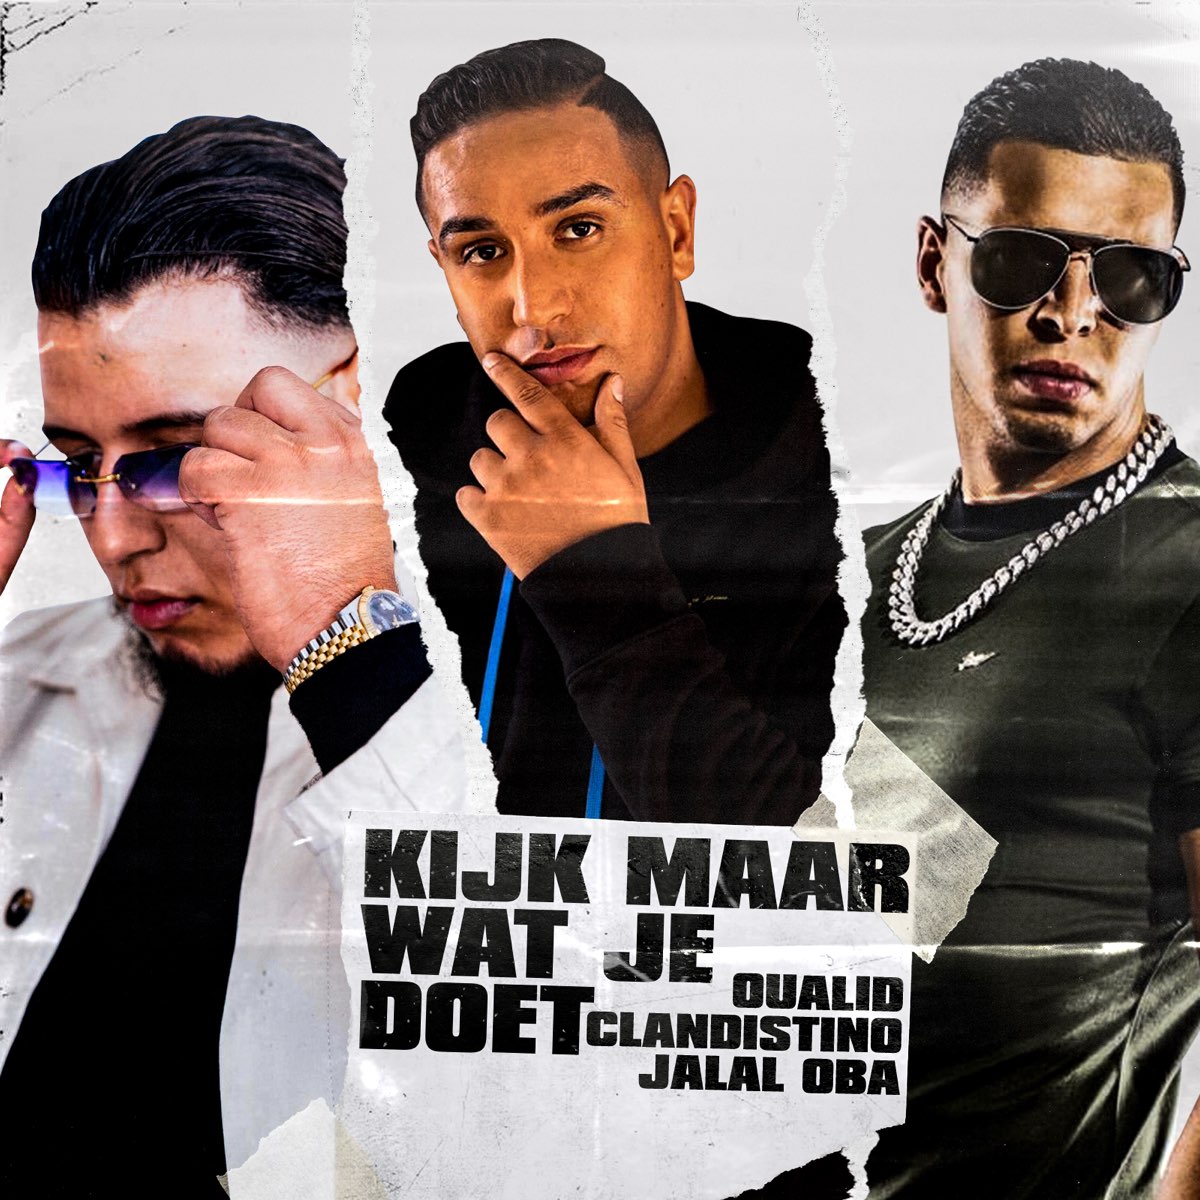 ‎Kijk Maar Wat Je Doet - Single by Clandistino, Jalal Oba & Oualid on ...